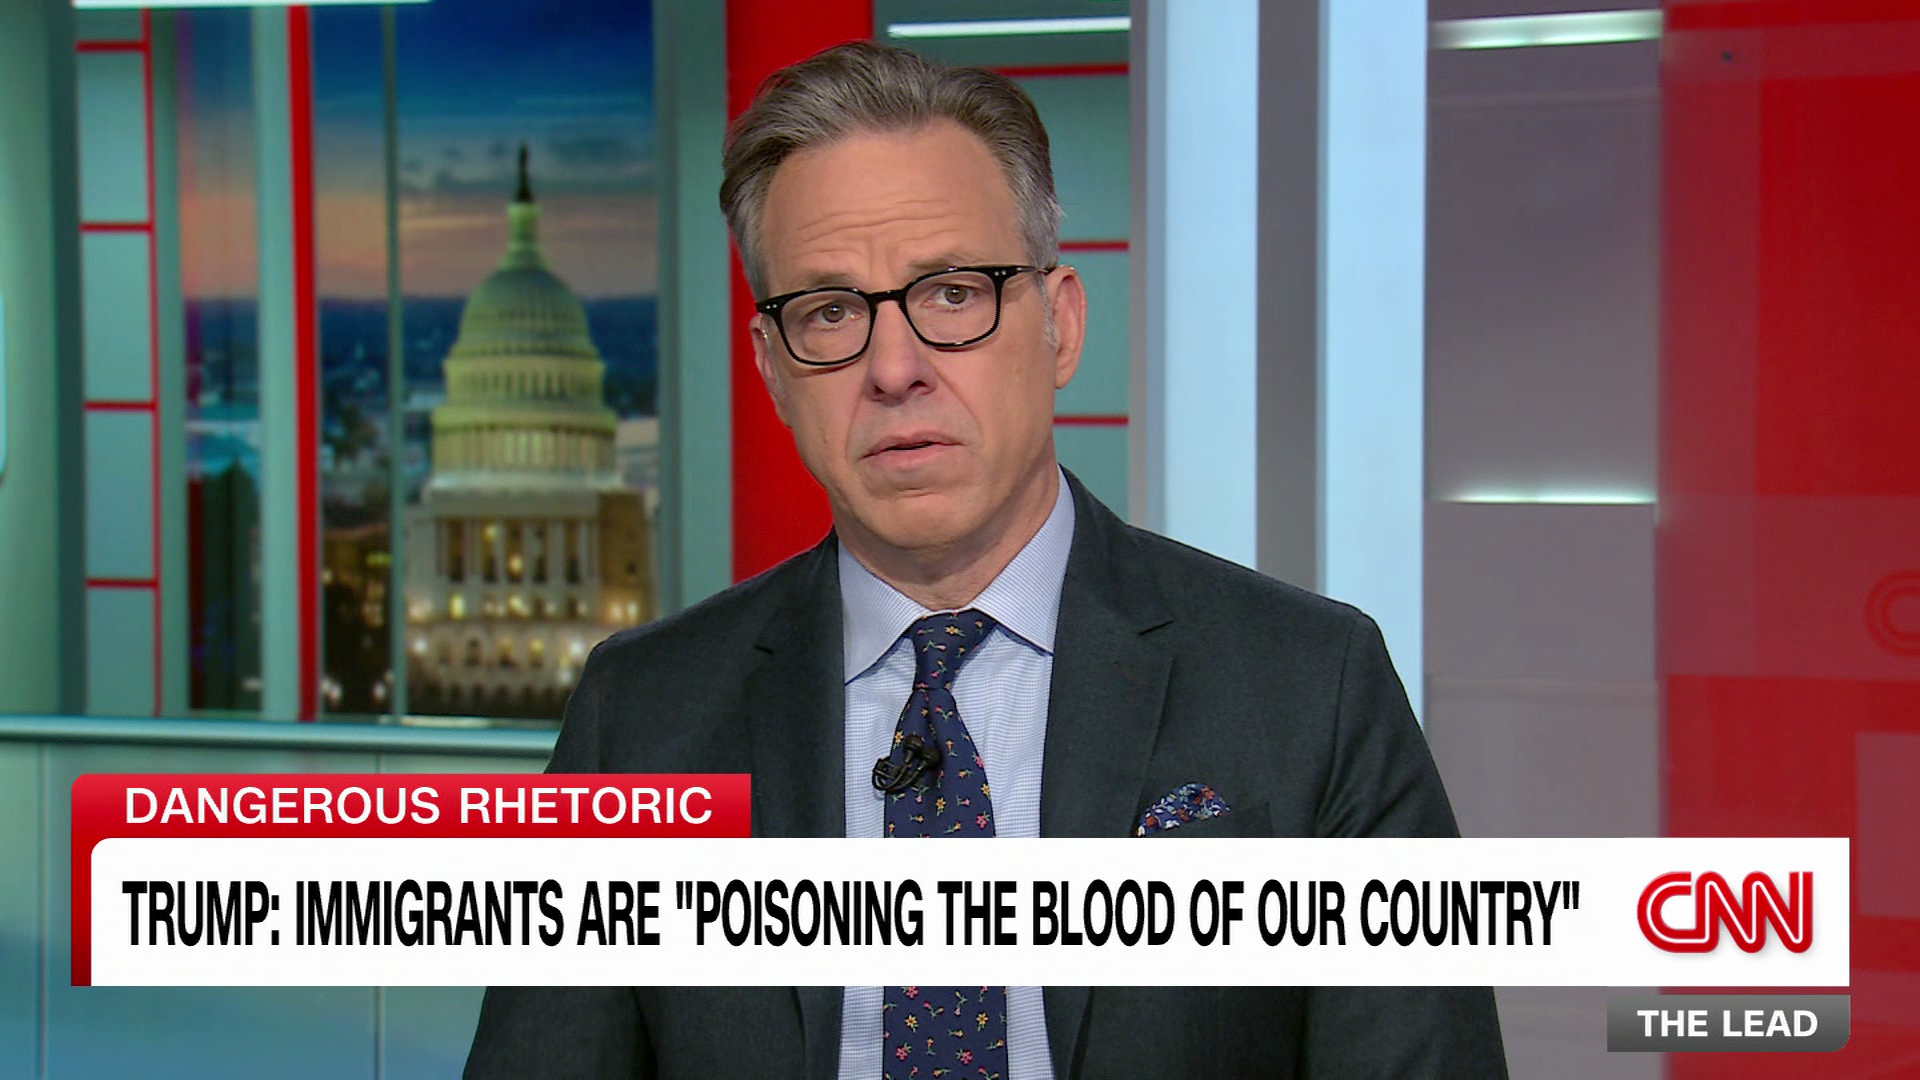 CNN chyron about Trump's anti-immigration rhetoric.